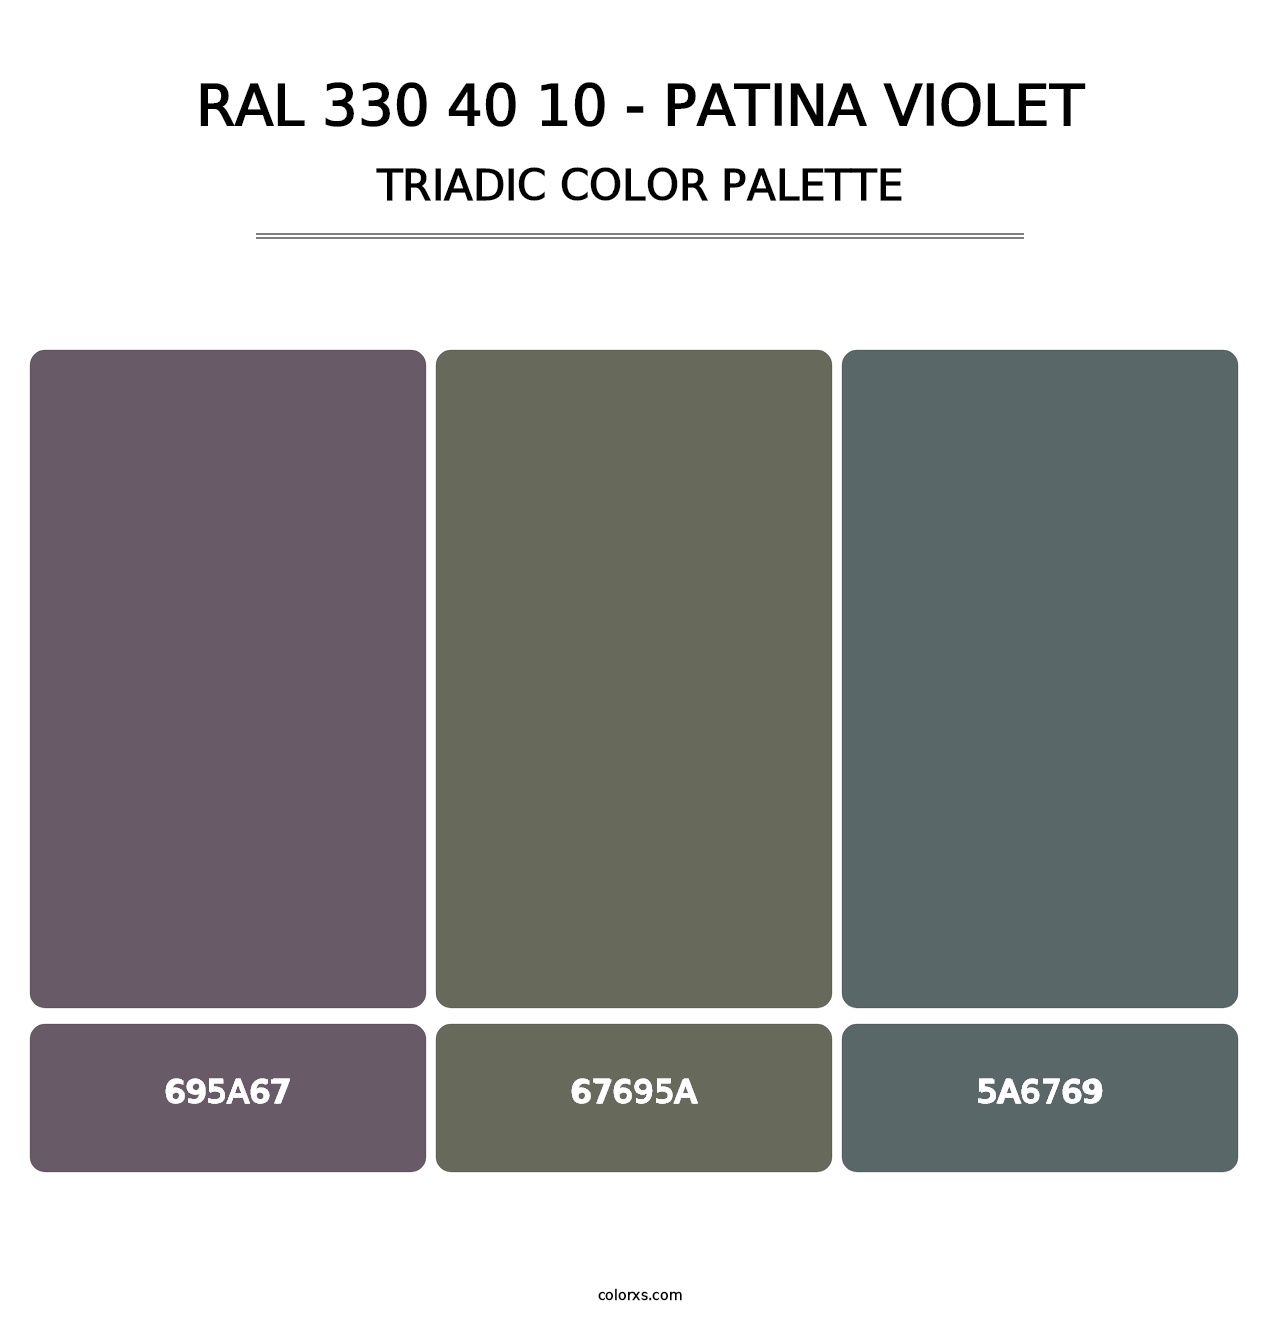 RAL 330 40 10 - Patina Violet - Triadic Color Palette